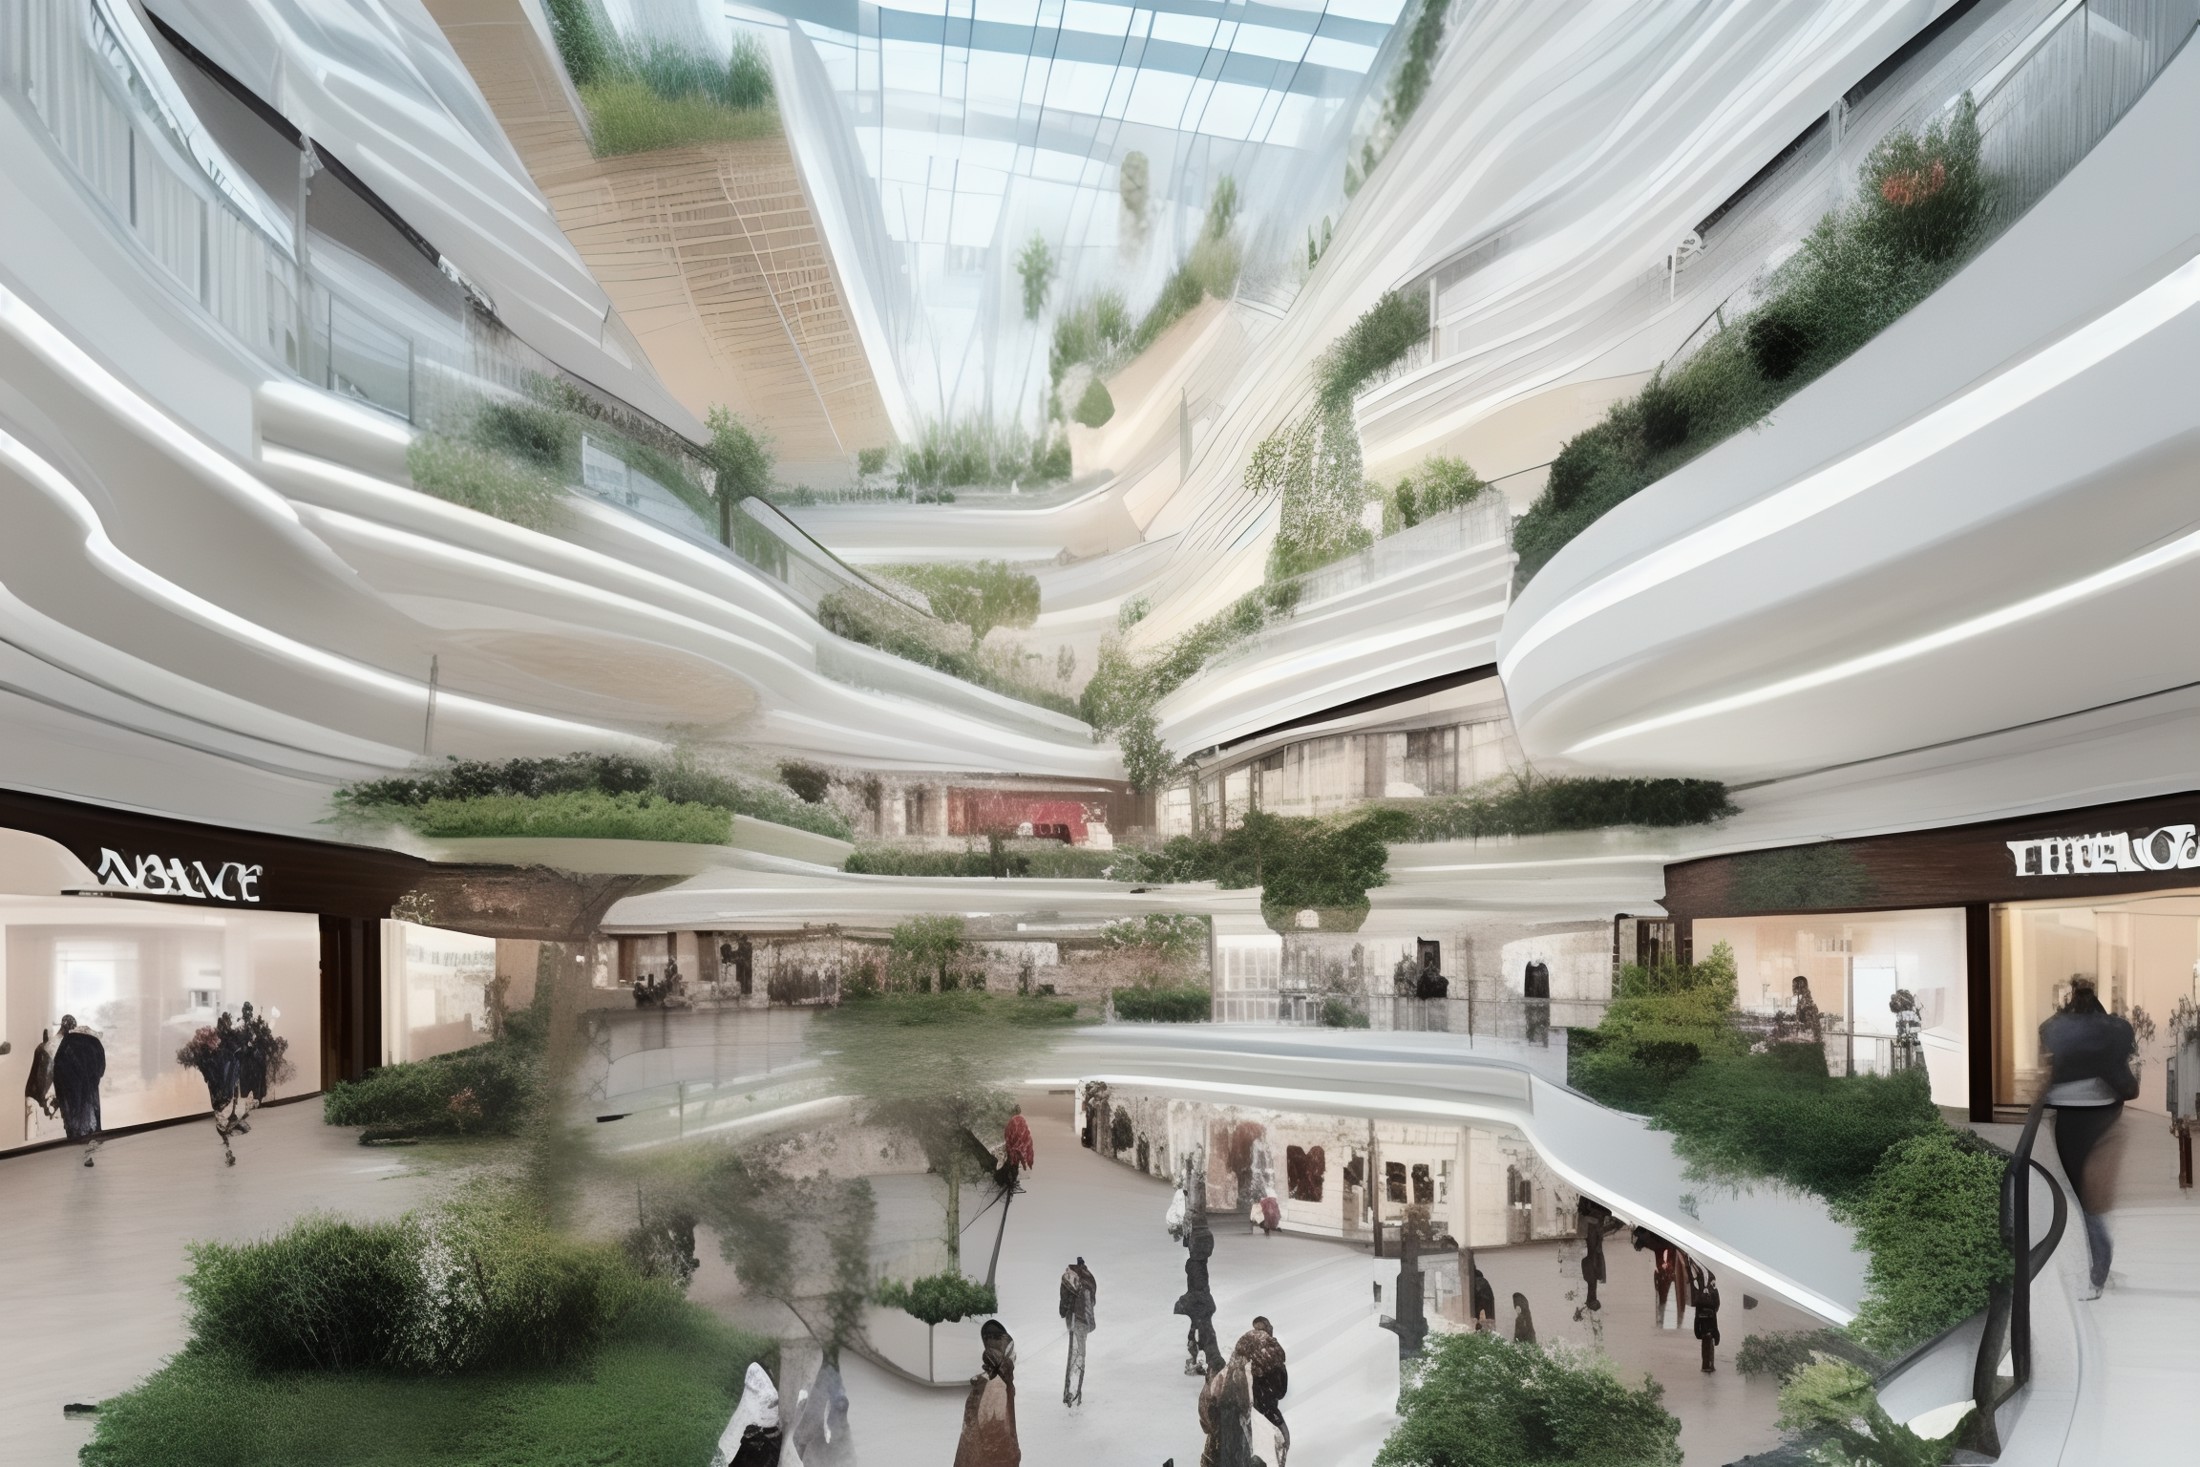 an atrium of a shoppingmall, people, green plants<lora:shoppingmall-atrium:1>